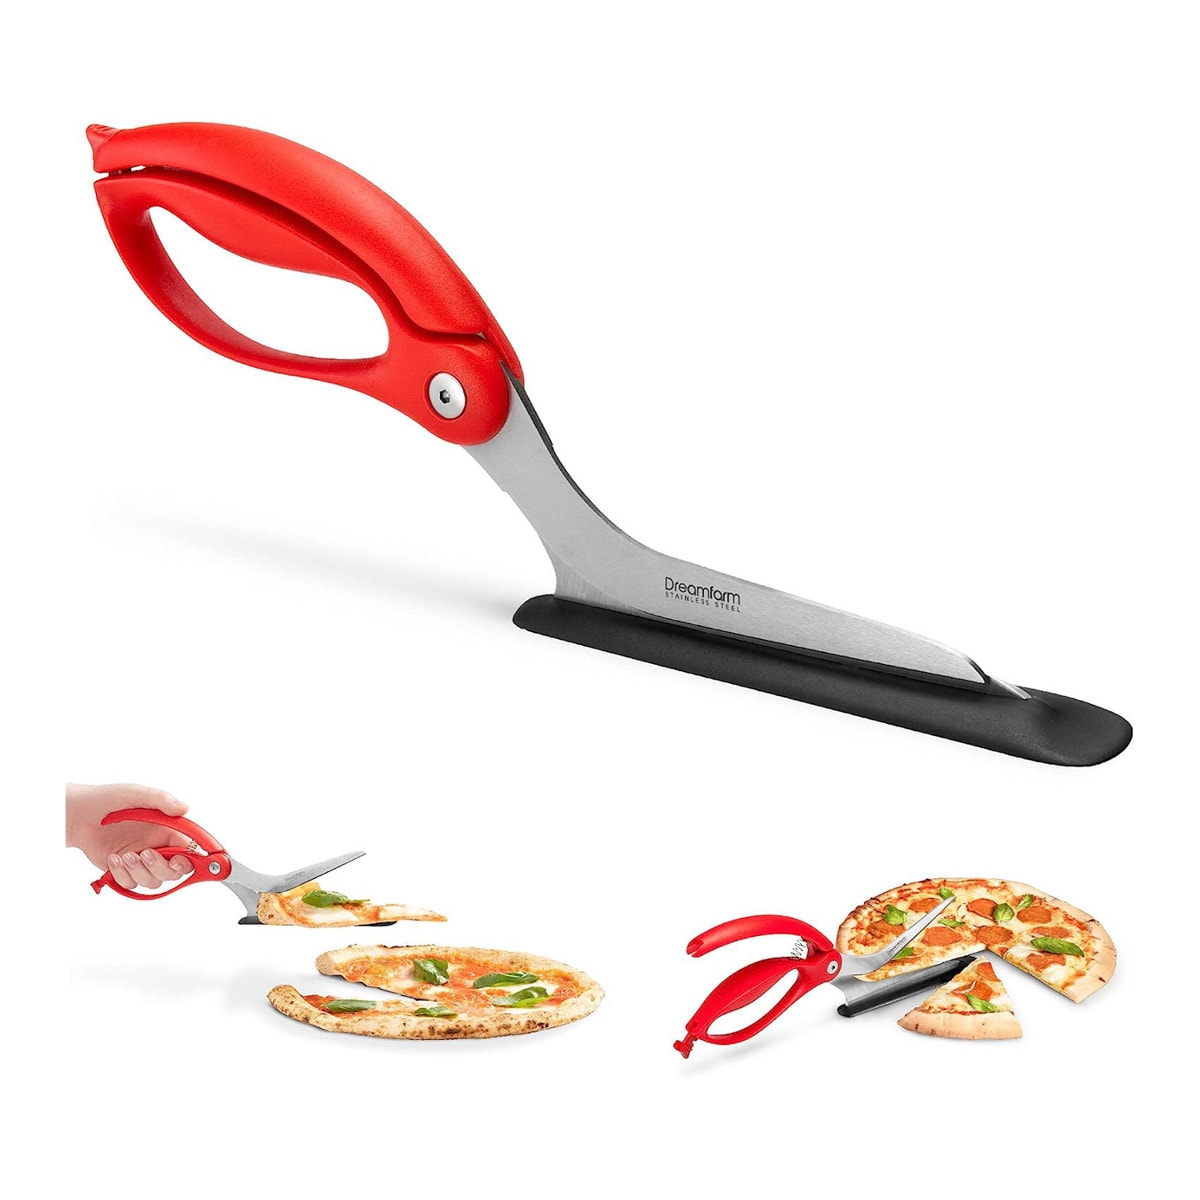 Pizza scissors cutting through pizza.